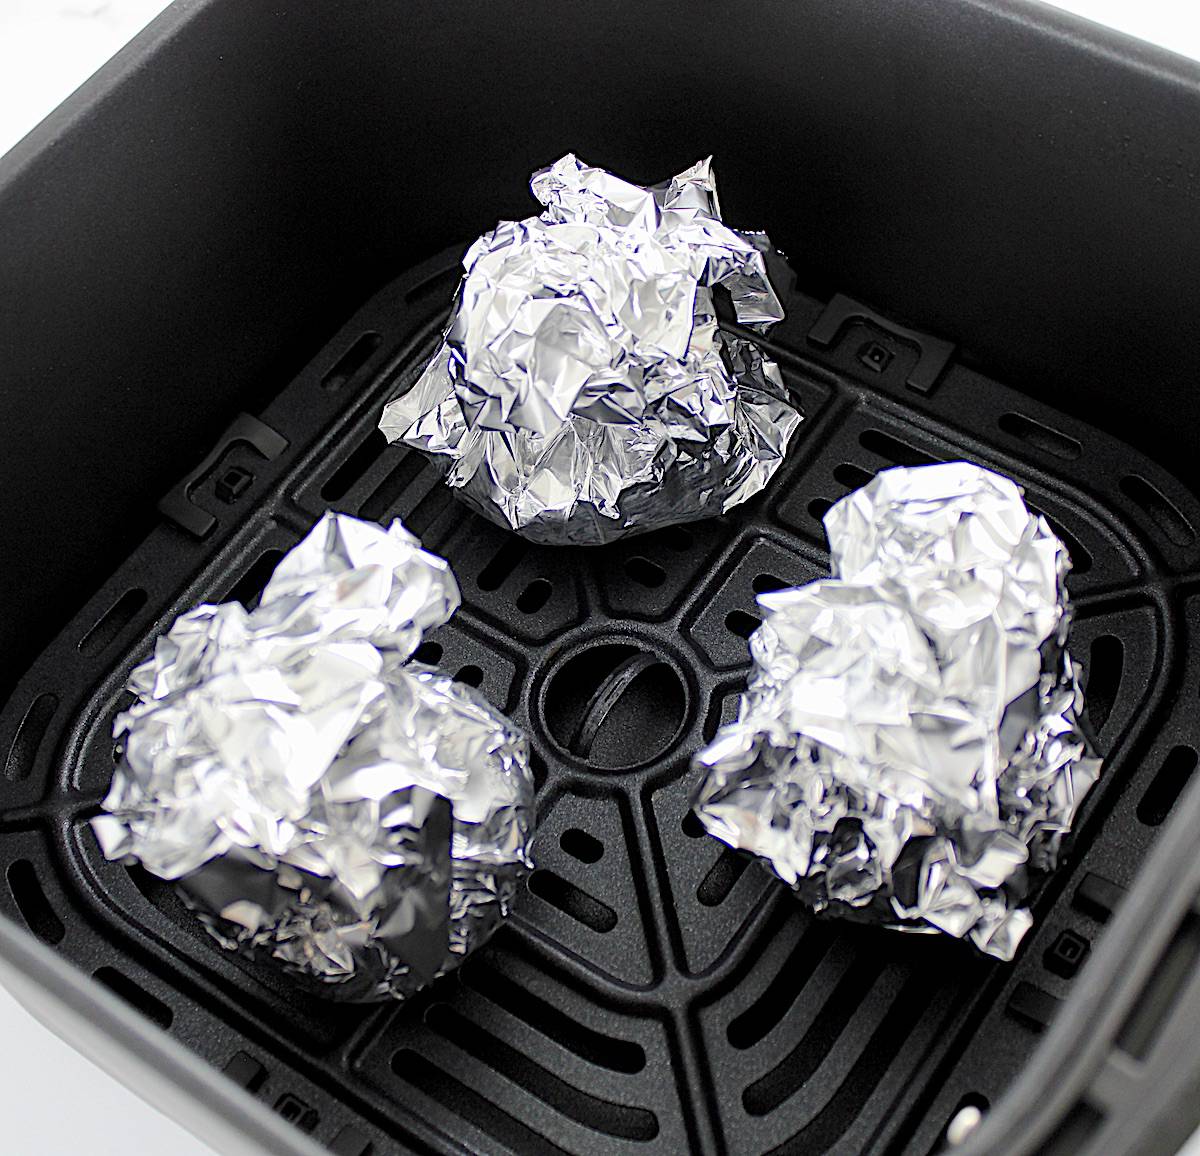 3 bundles of garlic wrapped in foil in air fryer basket